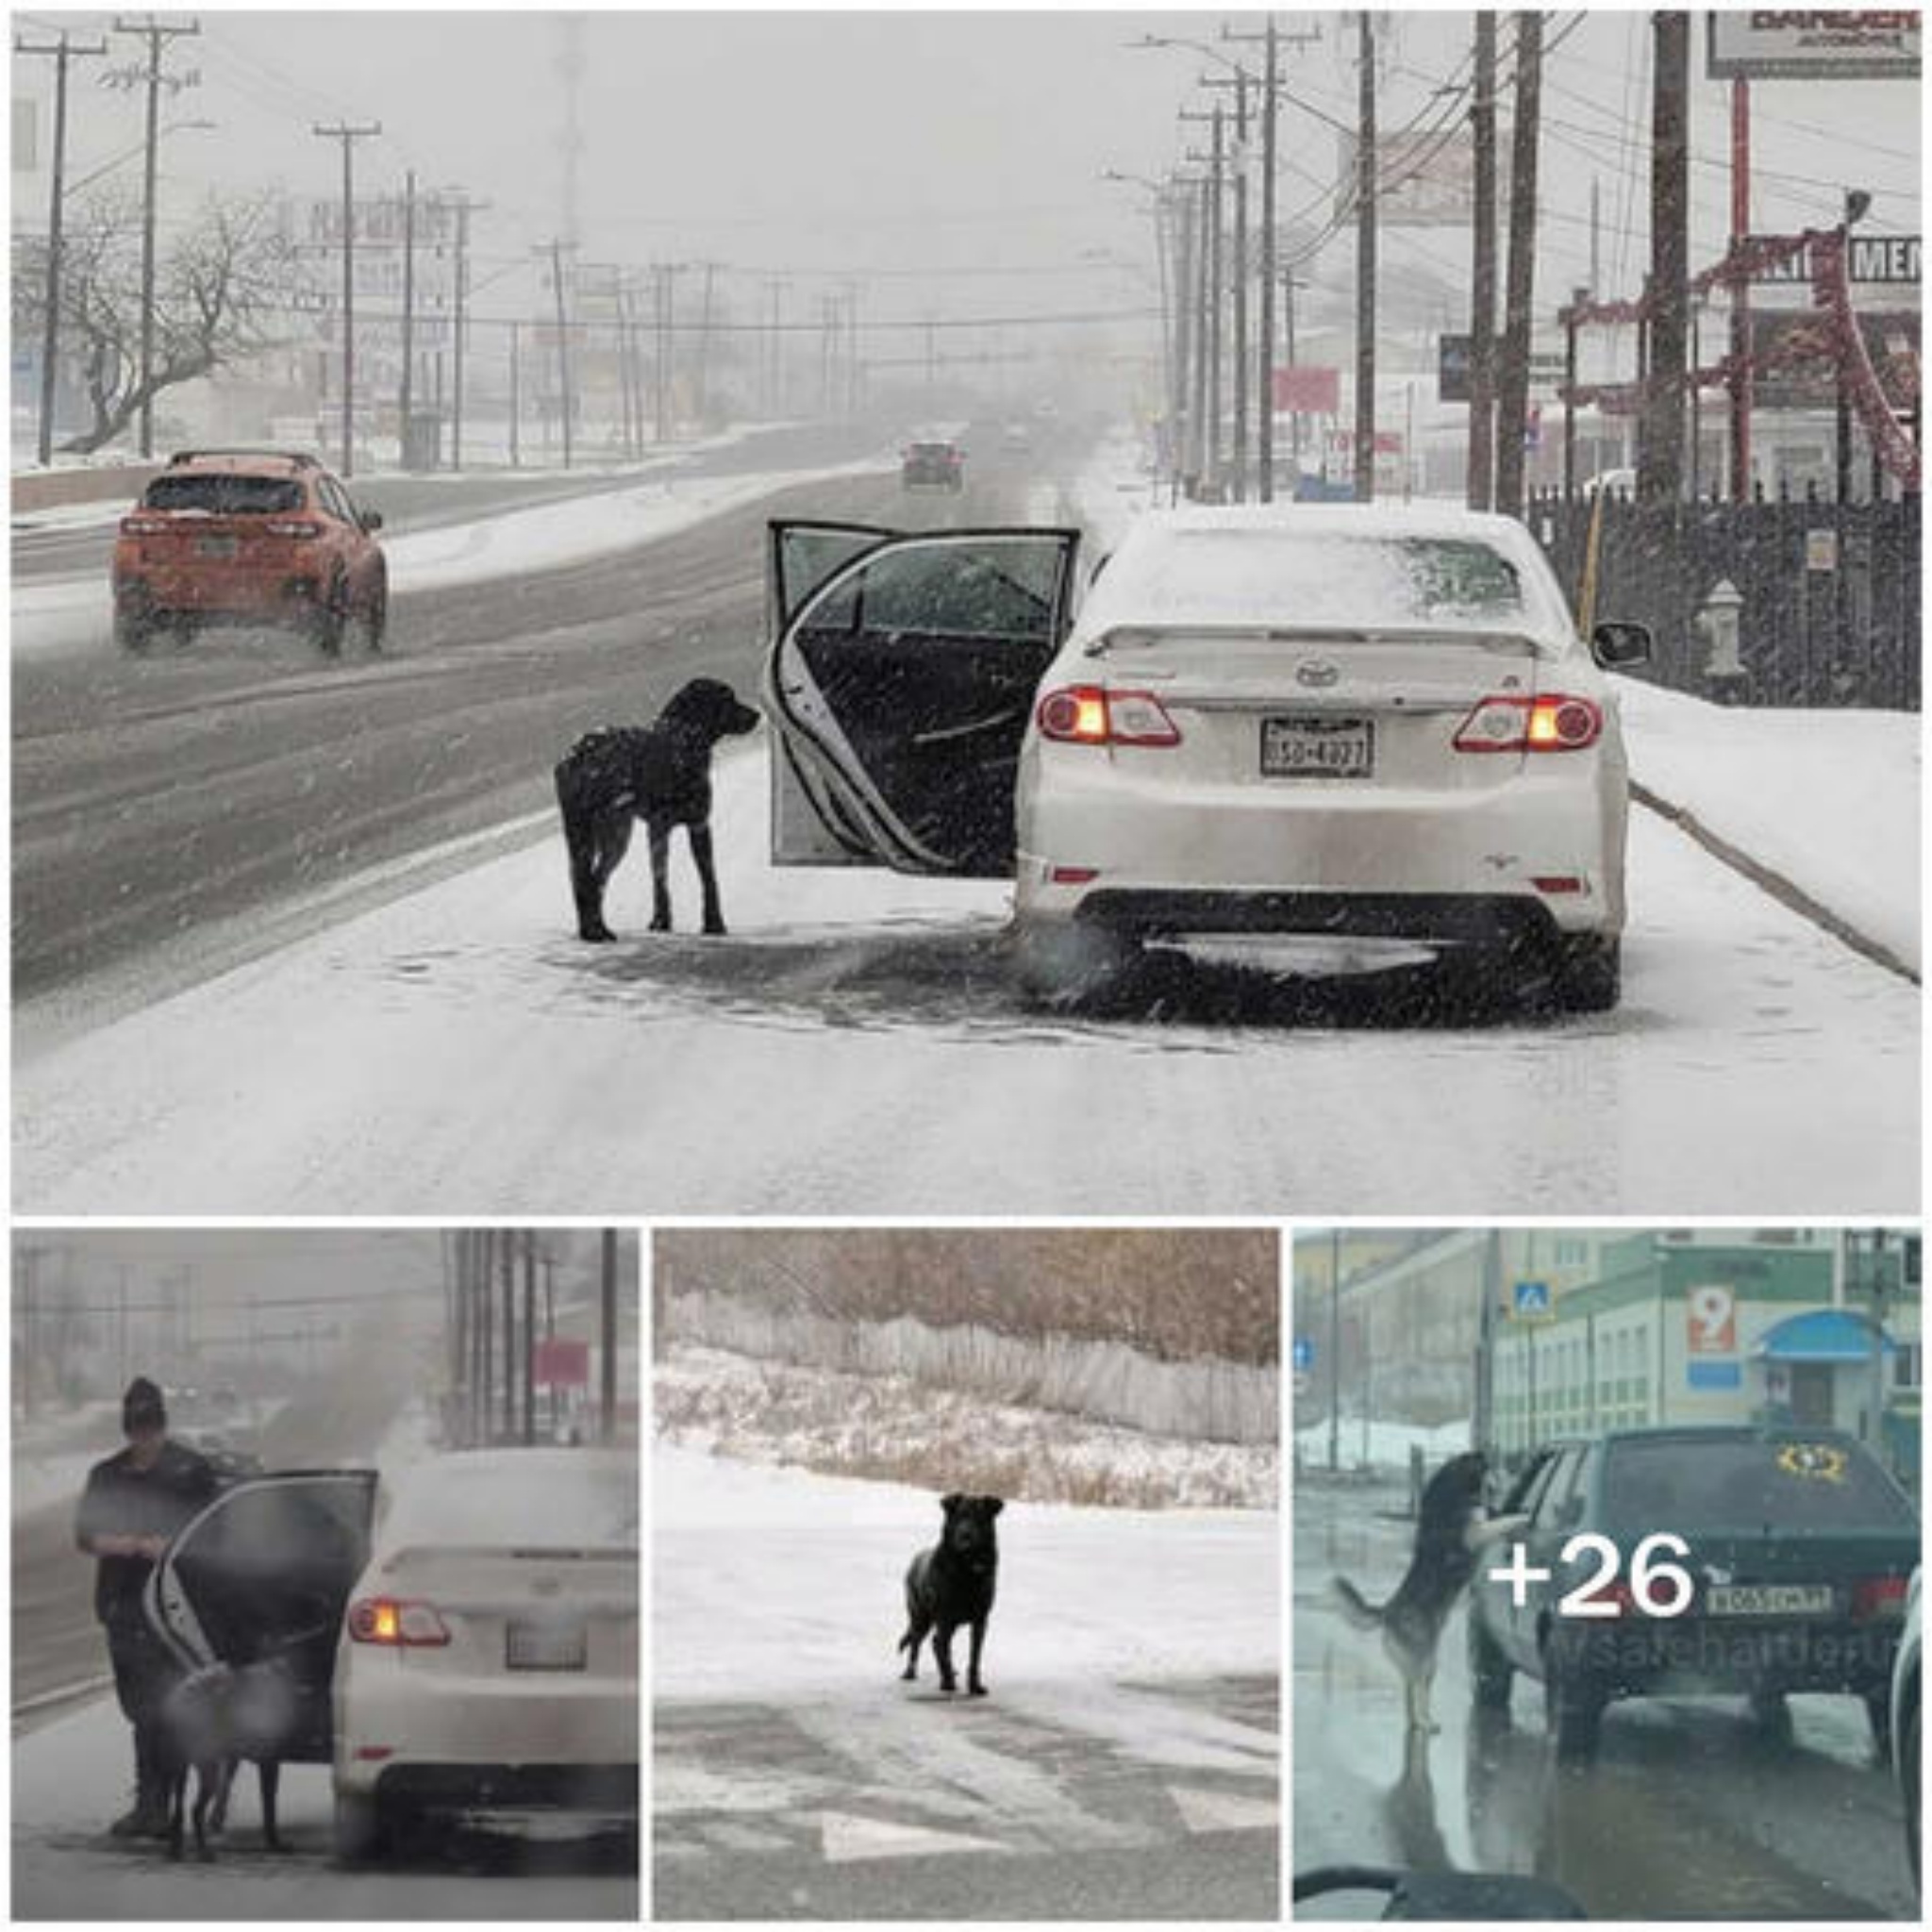 Heartwarming Winter VIDEO: Woman Uses Tortillas to Coax Freezing Dog into Her Warm Car